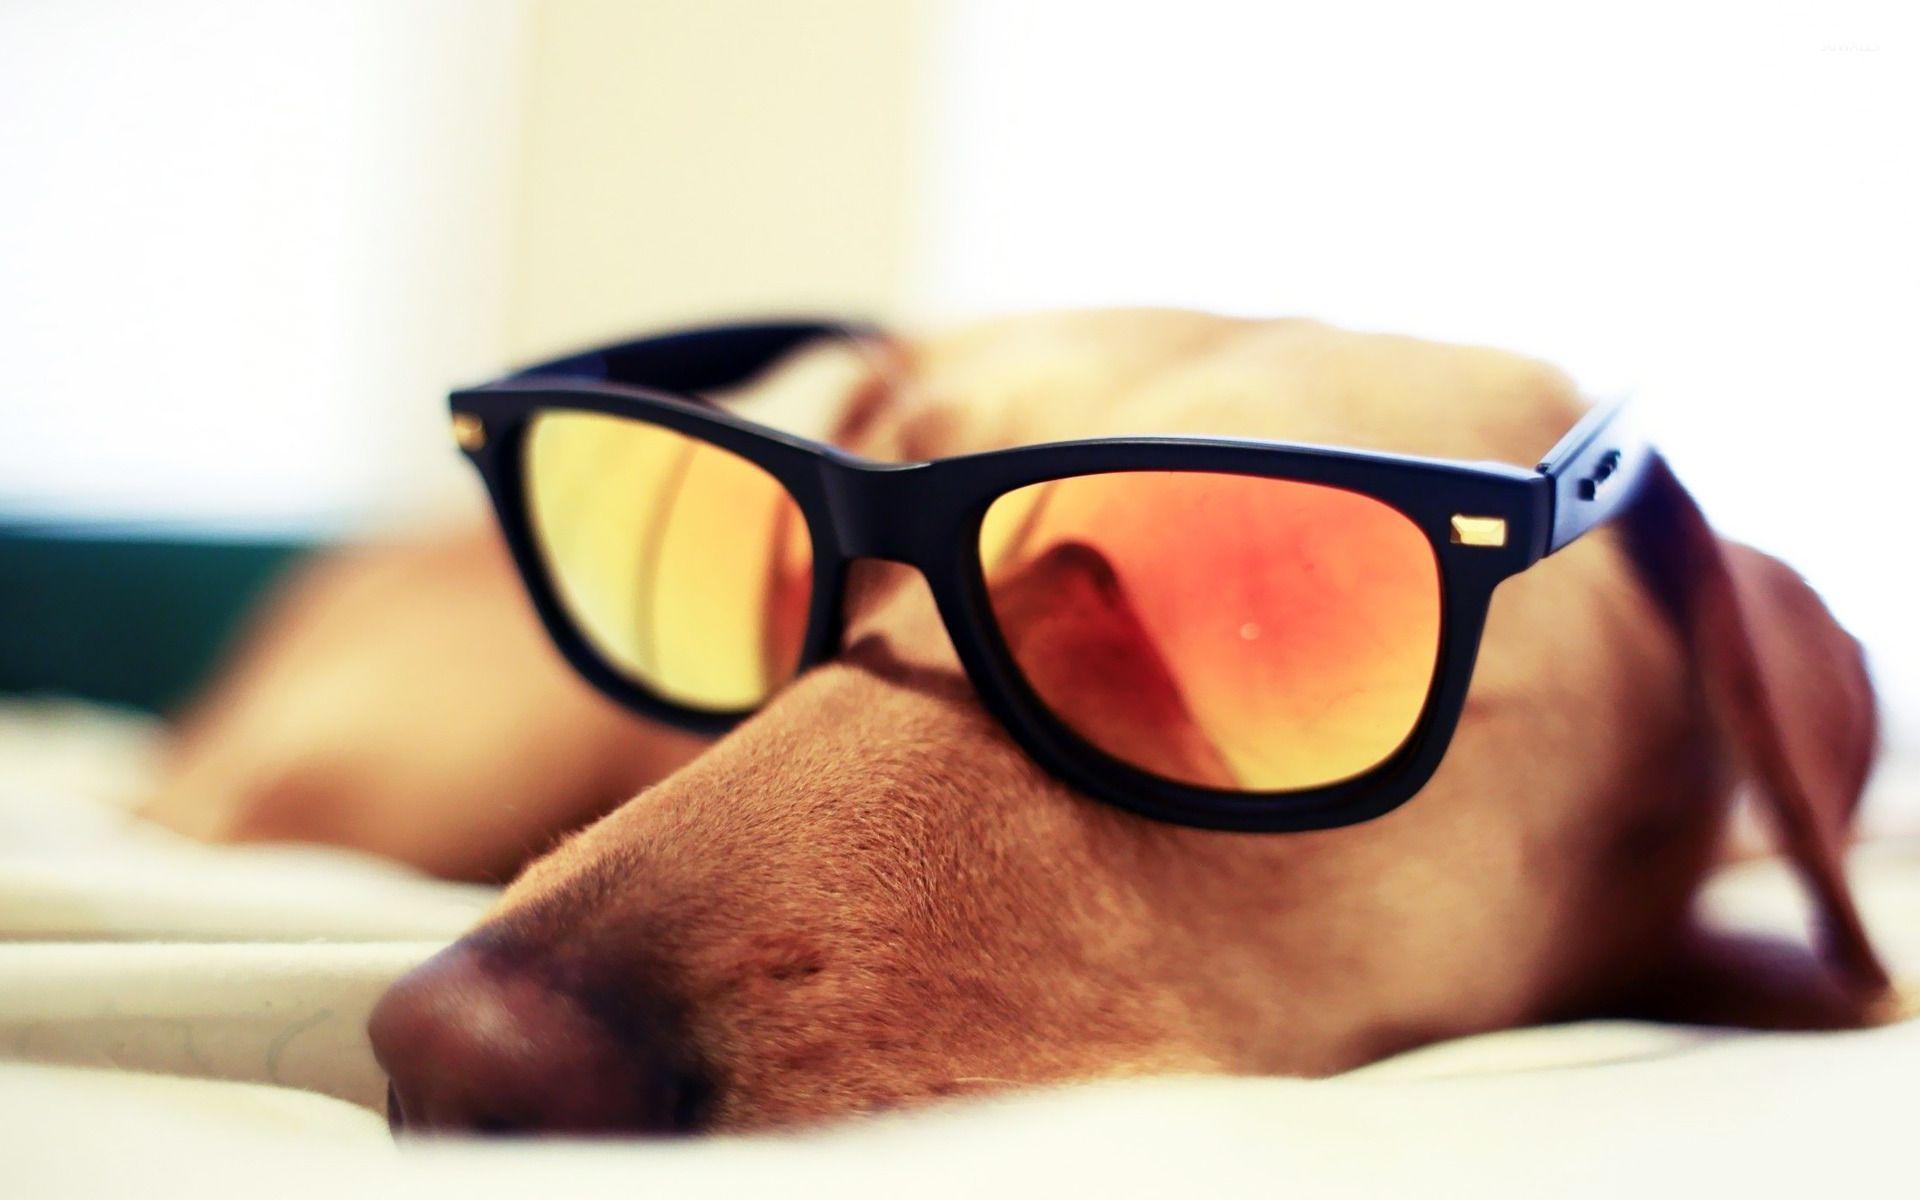 Dog sleeping with sunglasses wallpaper wallpaper